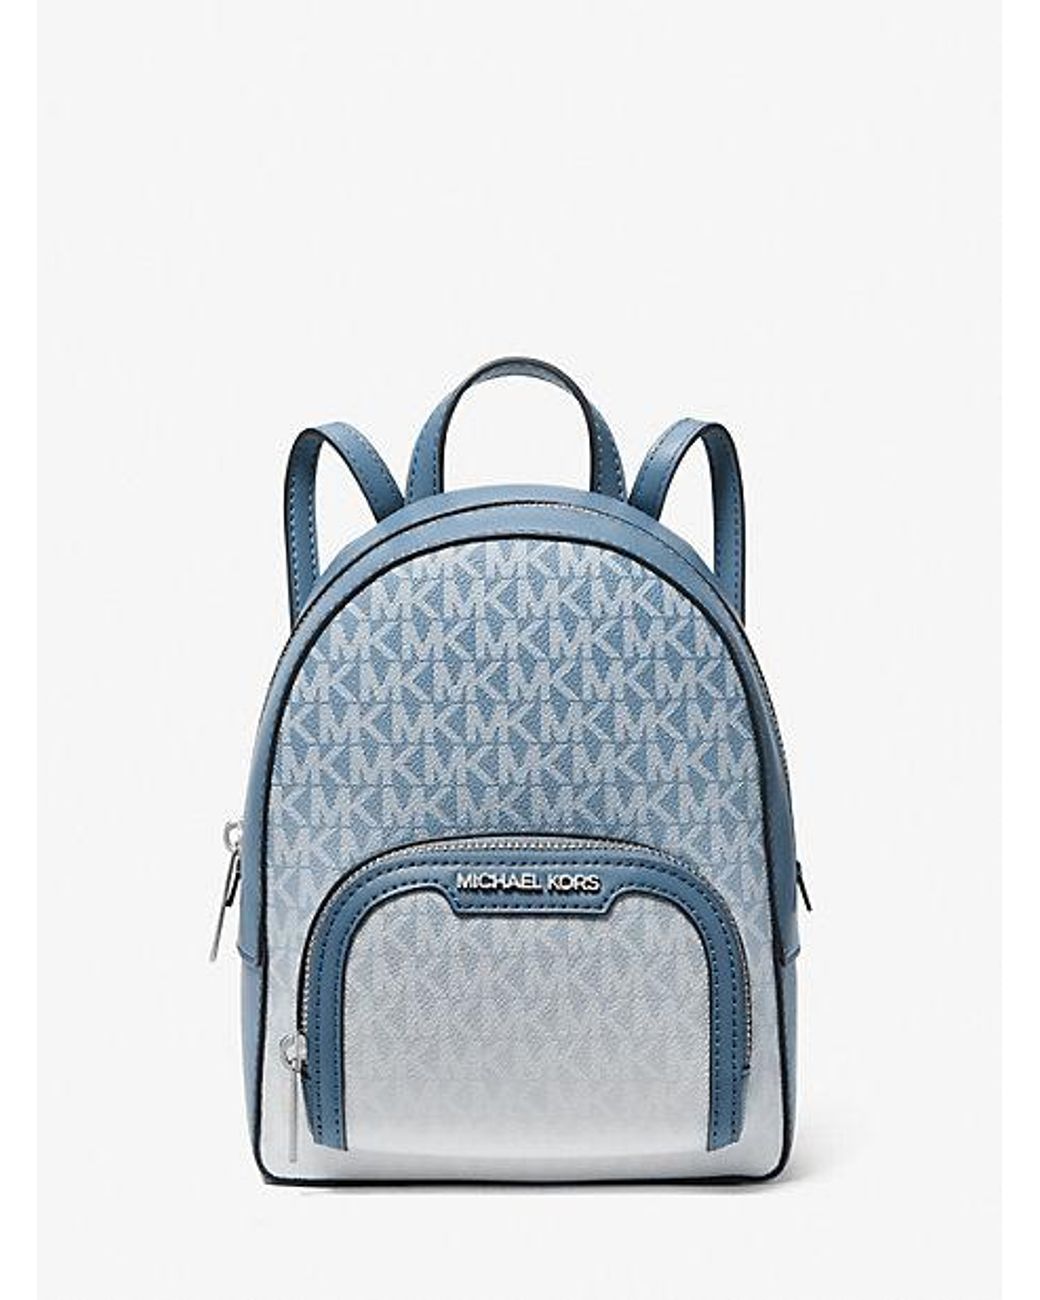 MICHAEL KORS Rhea Mini Logo Backpack Review | Compact & Stylish | UPC:  190864487632 - YouTube